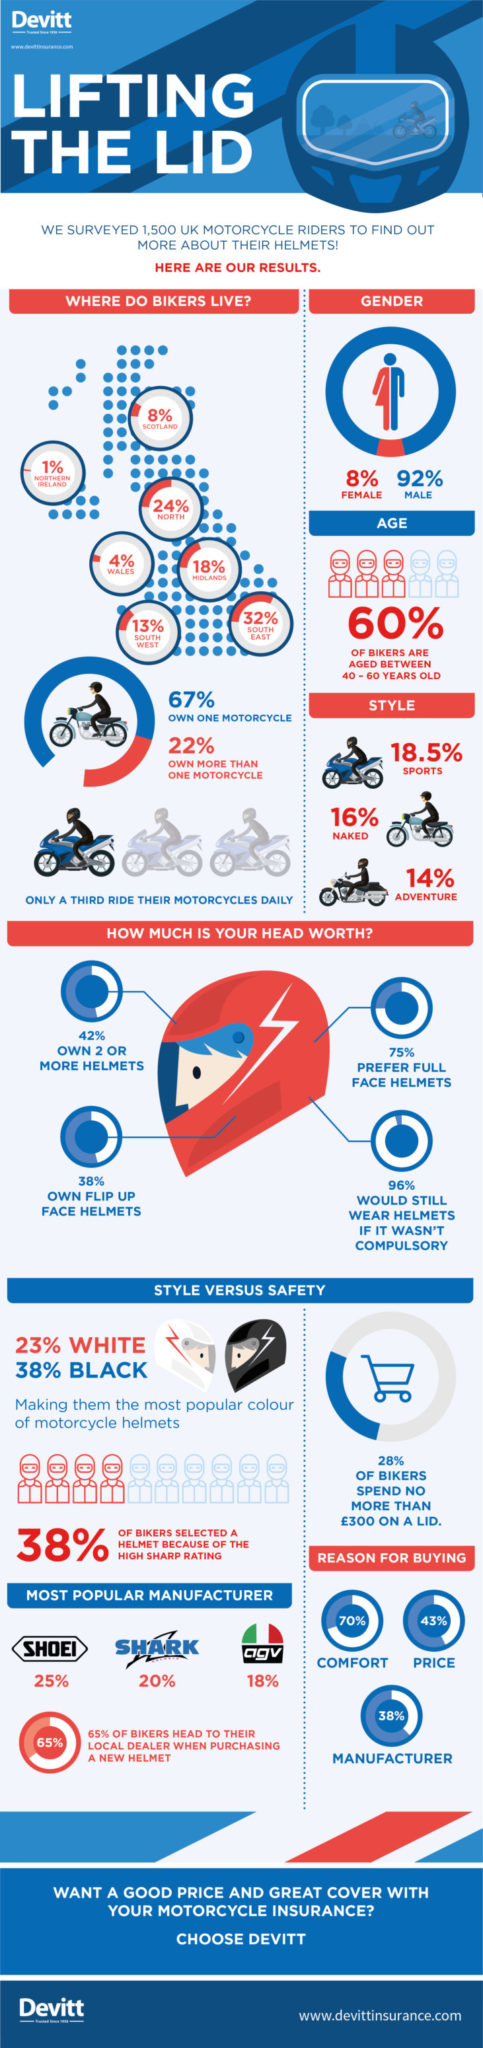 Devitt-Insurance-motorcycle-helmet-safety-infographic